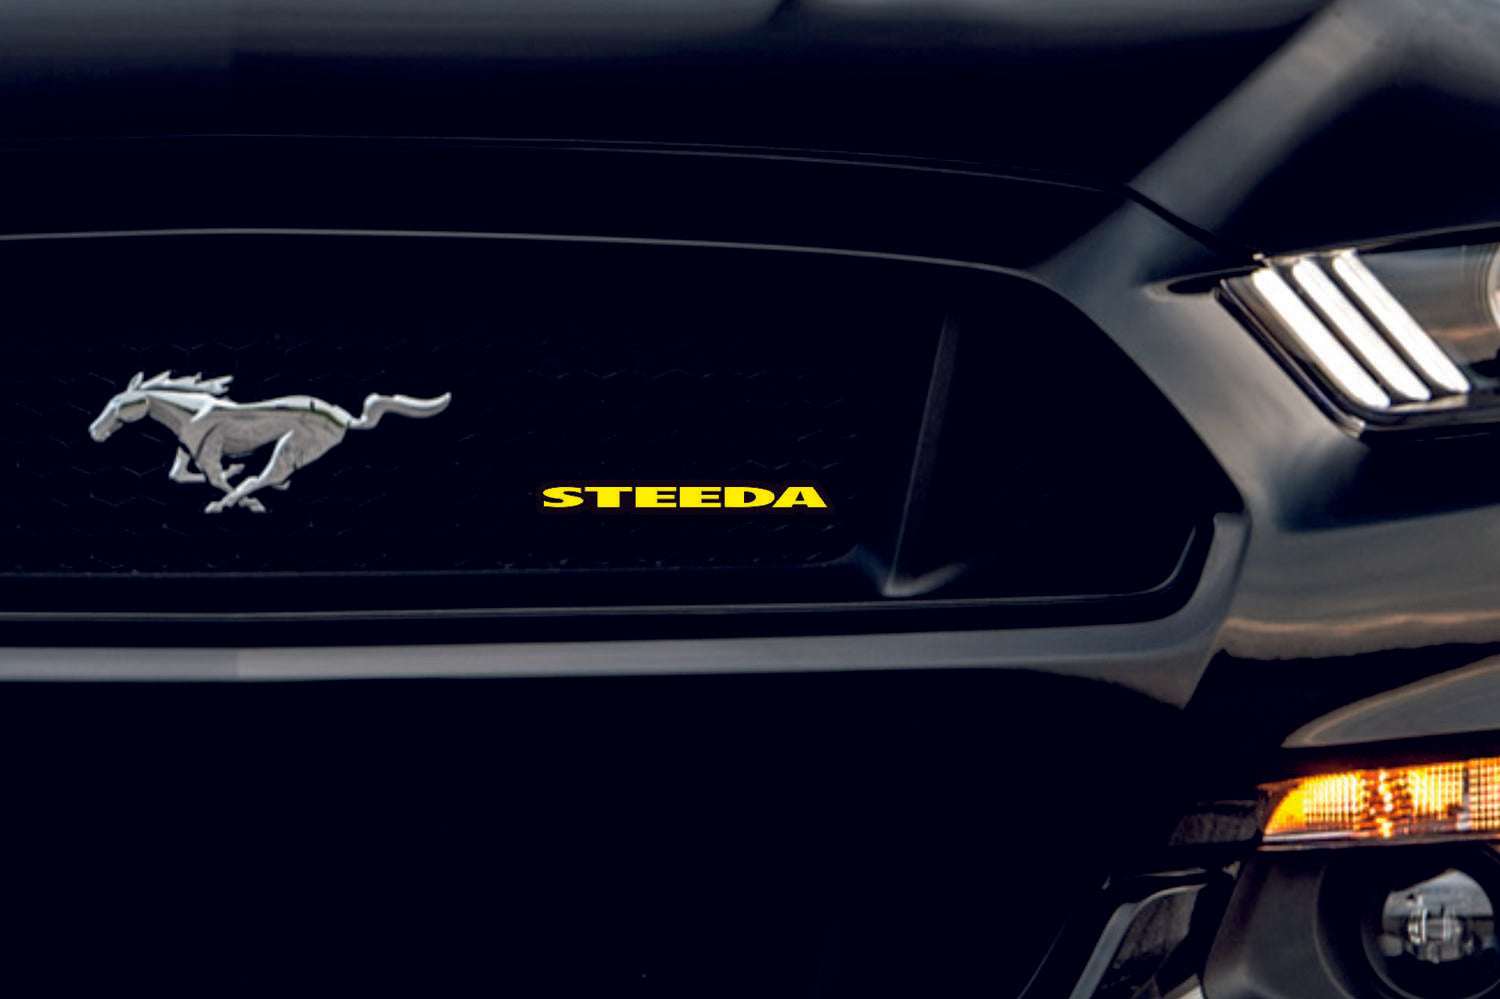 Ford Radiator grille emblem with STEEDA logo